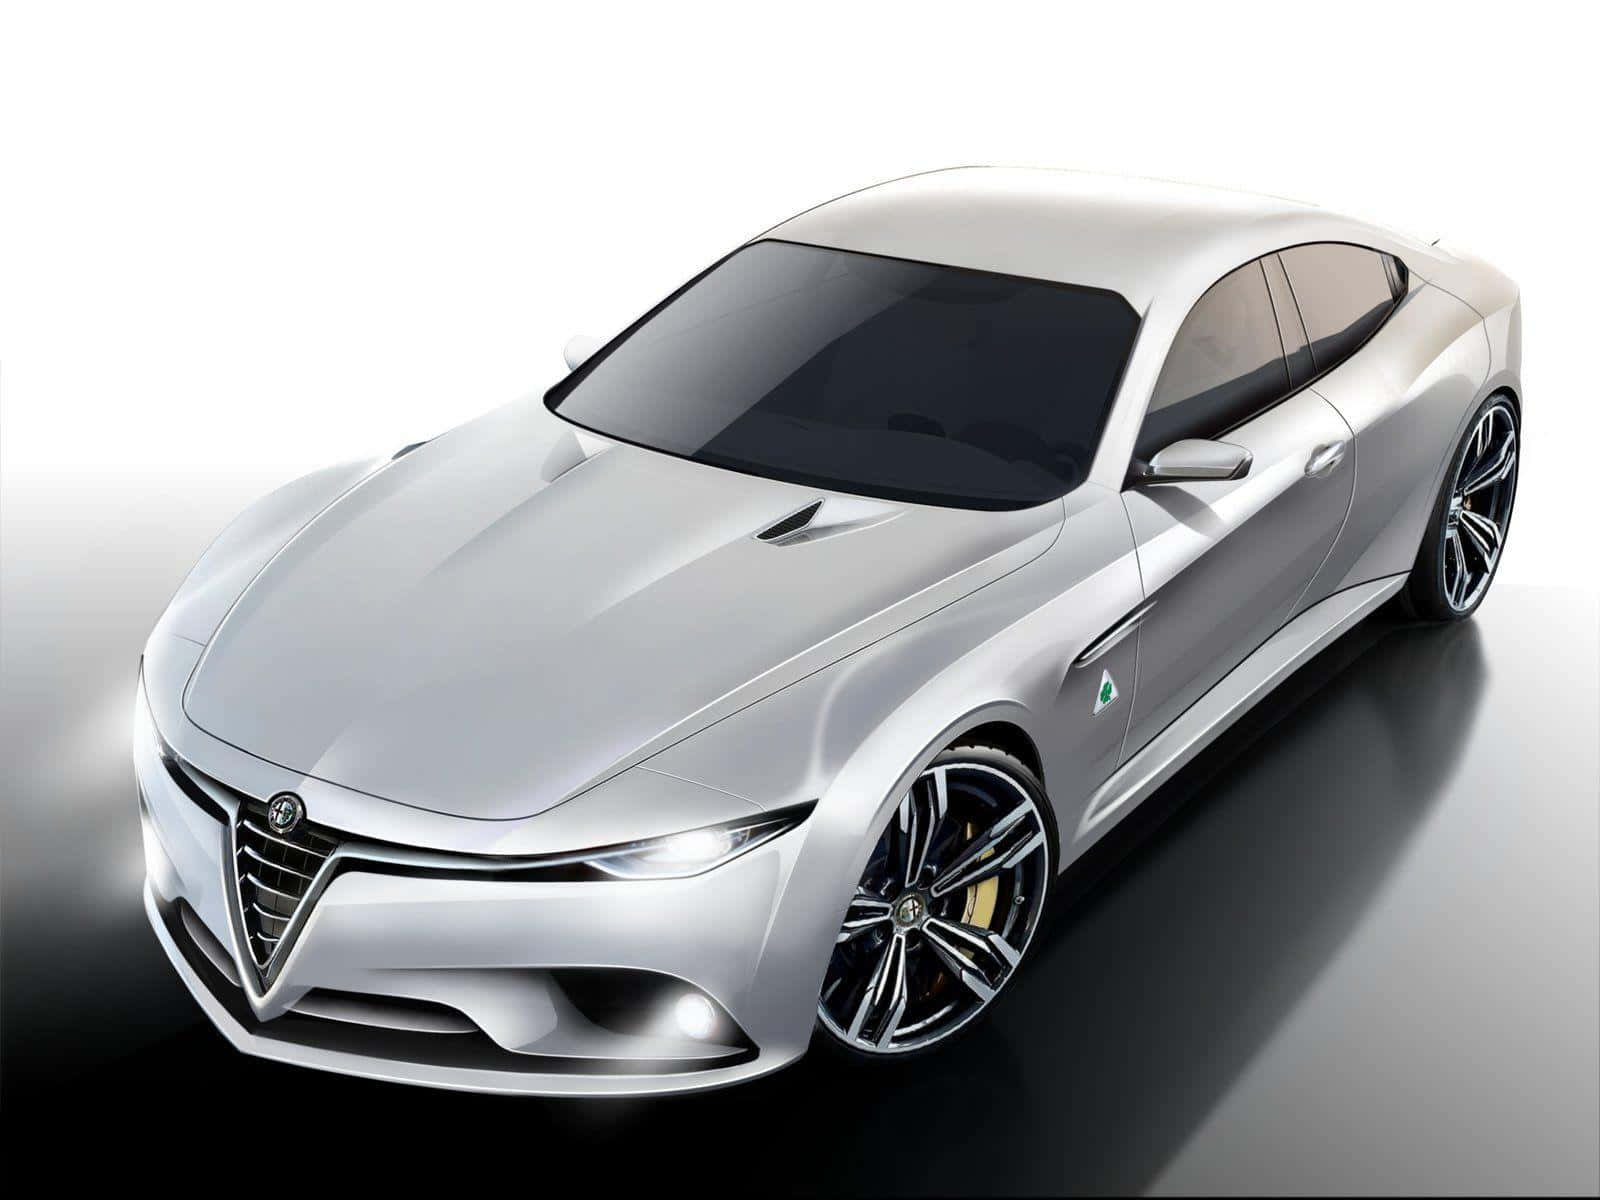 "Feel the power of Alfa Romeo engineering"